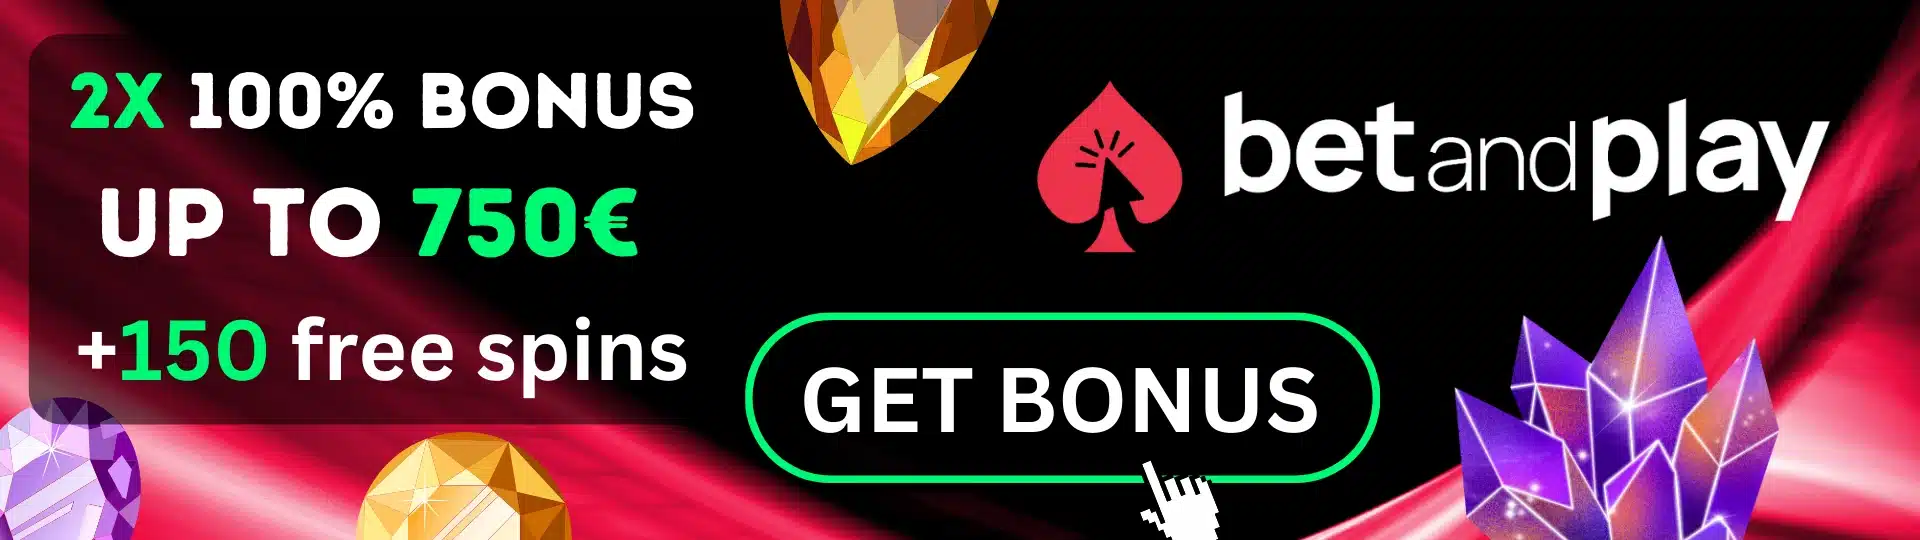 Mobile Online Casinos BetandPlay Bonus